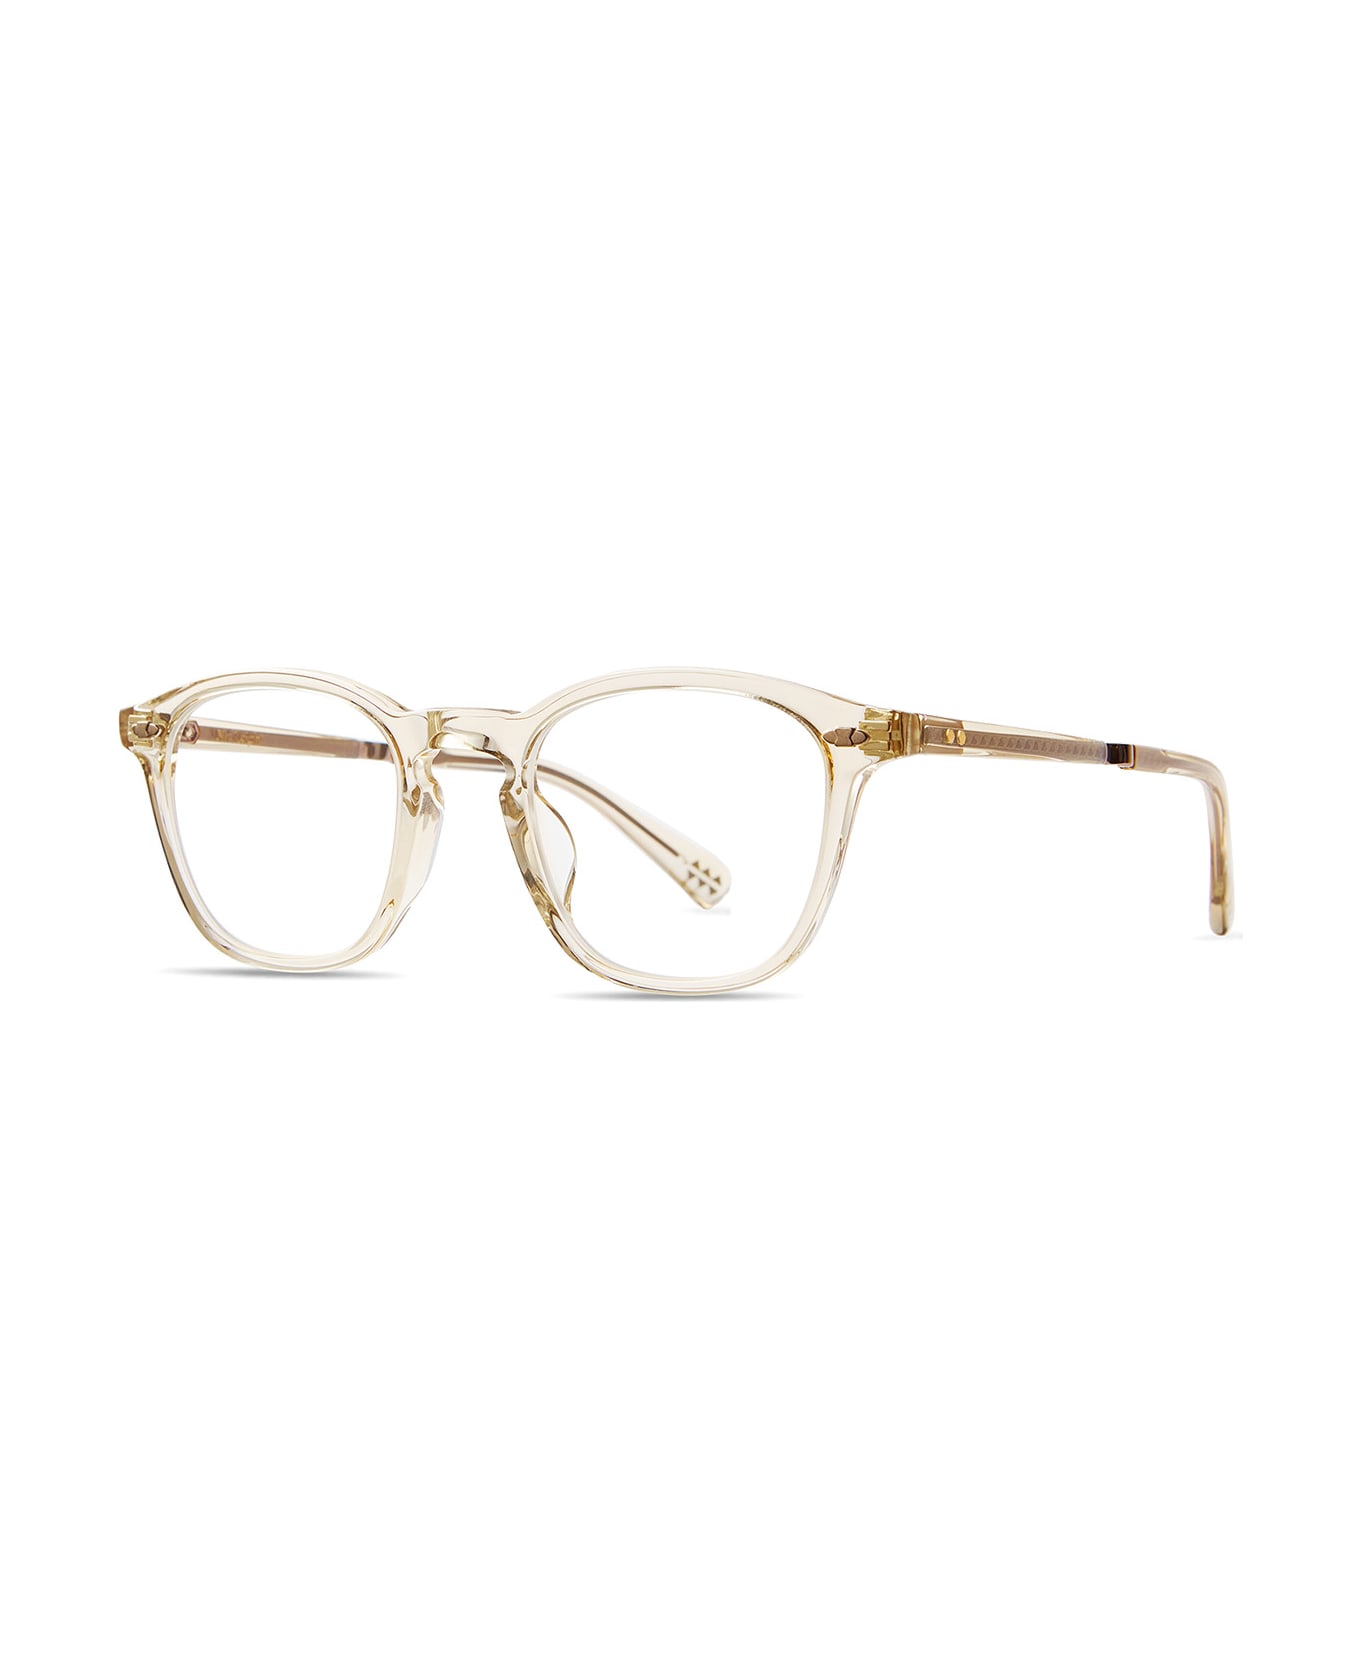 Mr. Leight Devon C Chandelier-copper Glasses - Chandelier-Copper